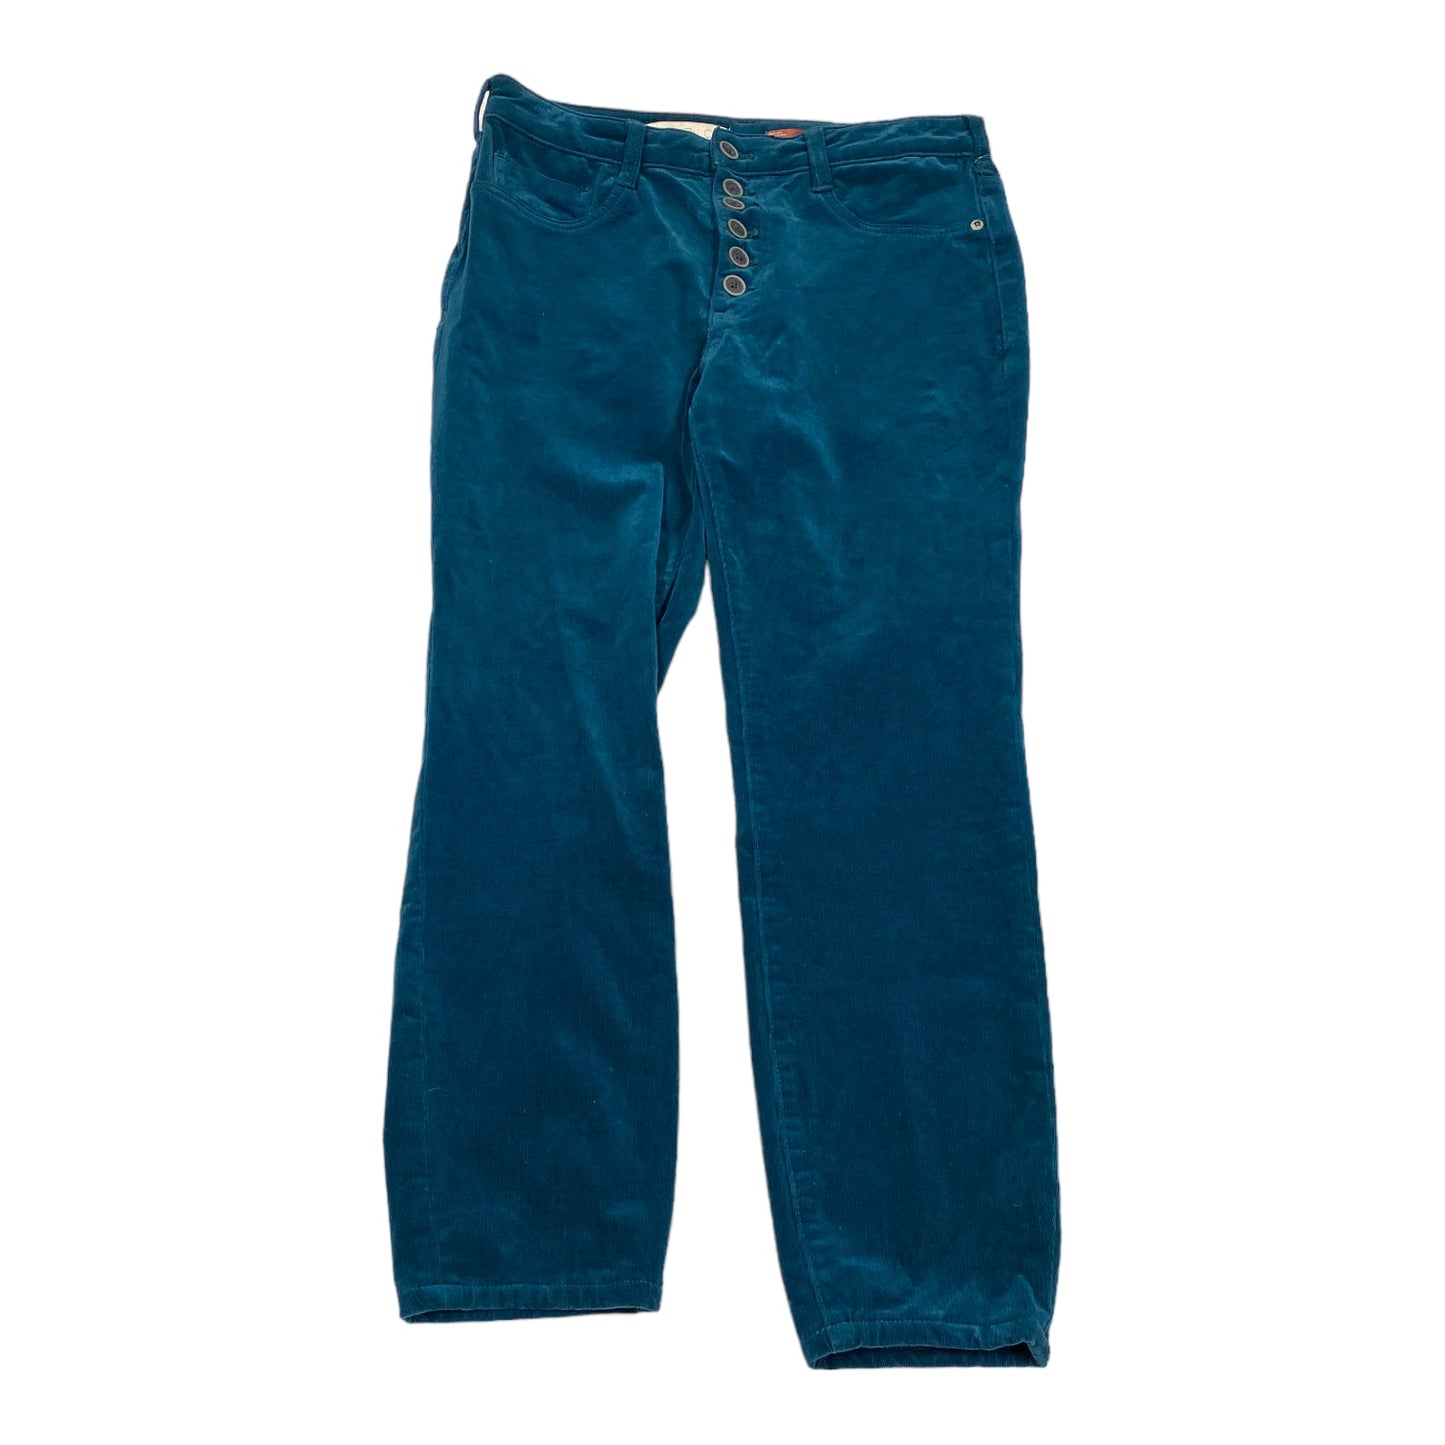 Pants Corduroy By Pilcro  Size: 12